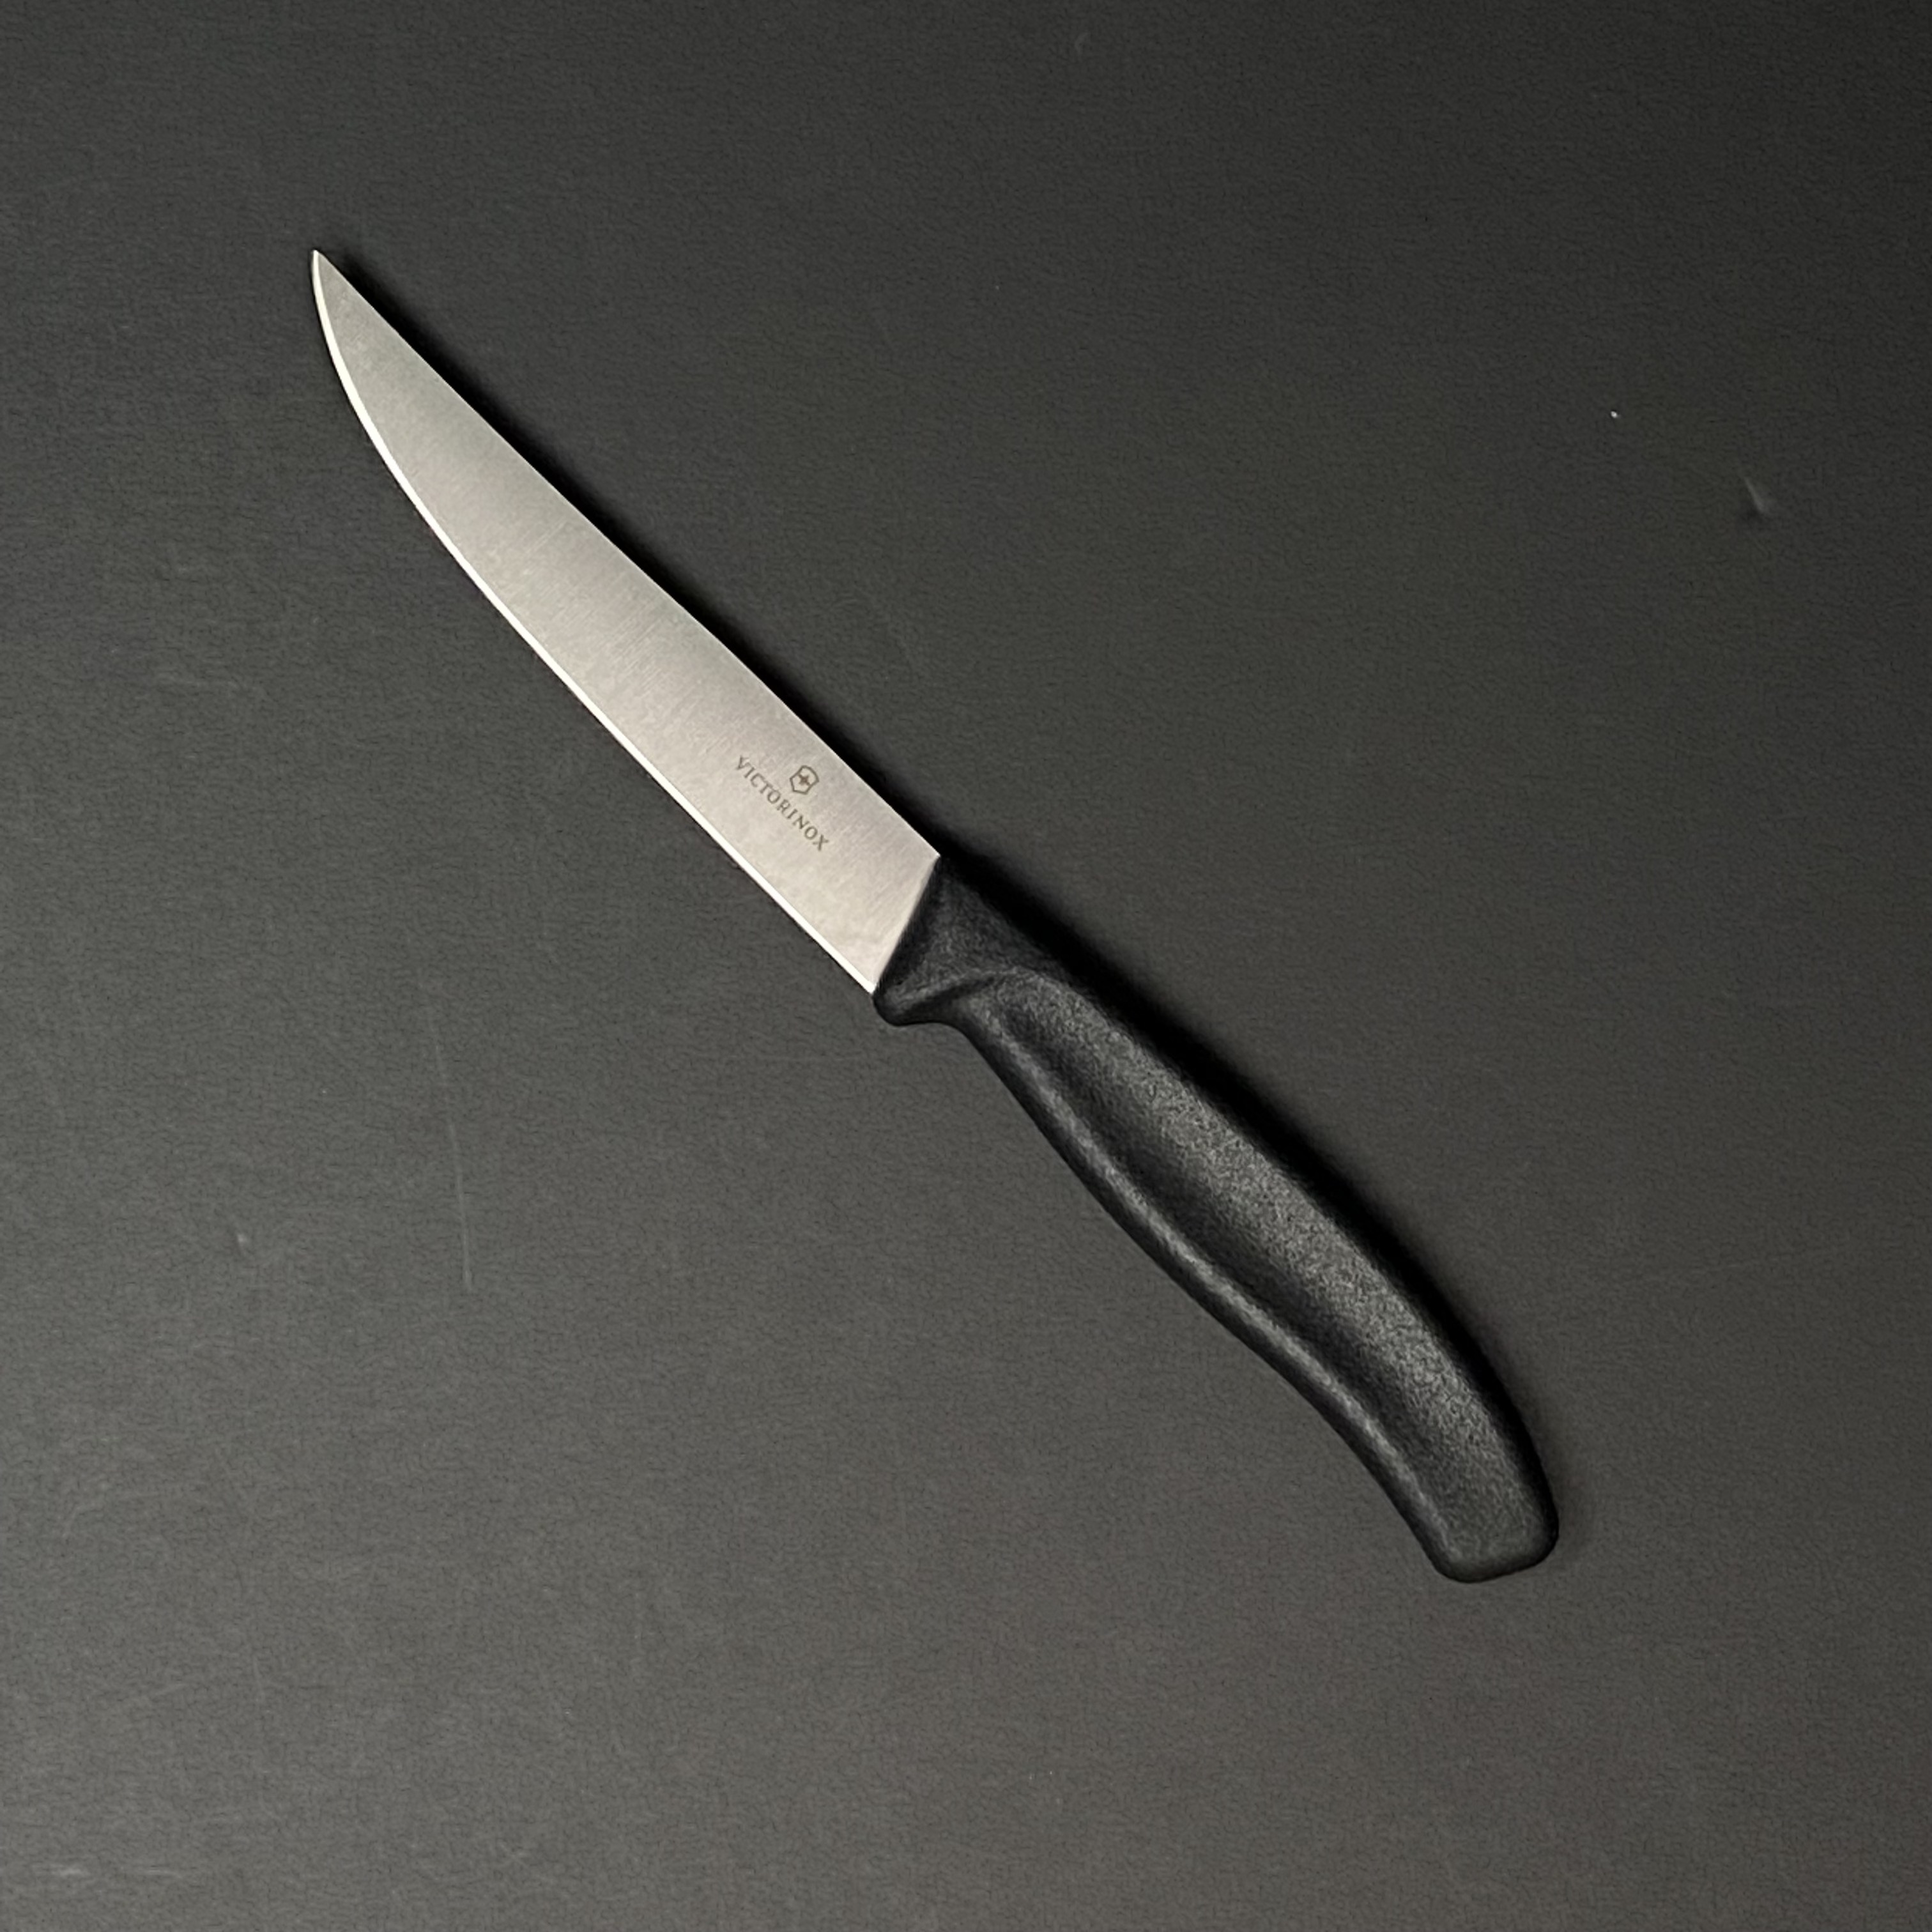 Concepts Victorinox Chef Knife Set